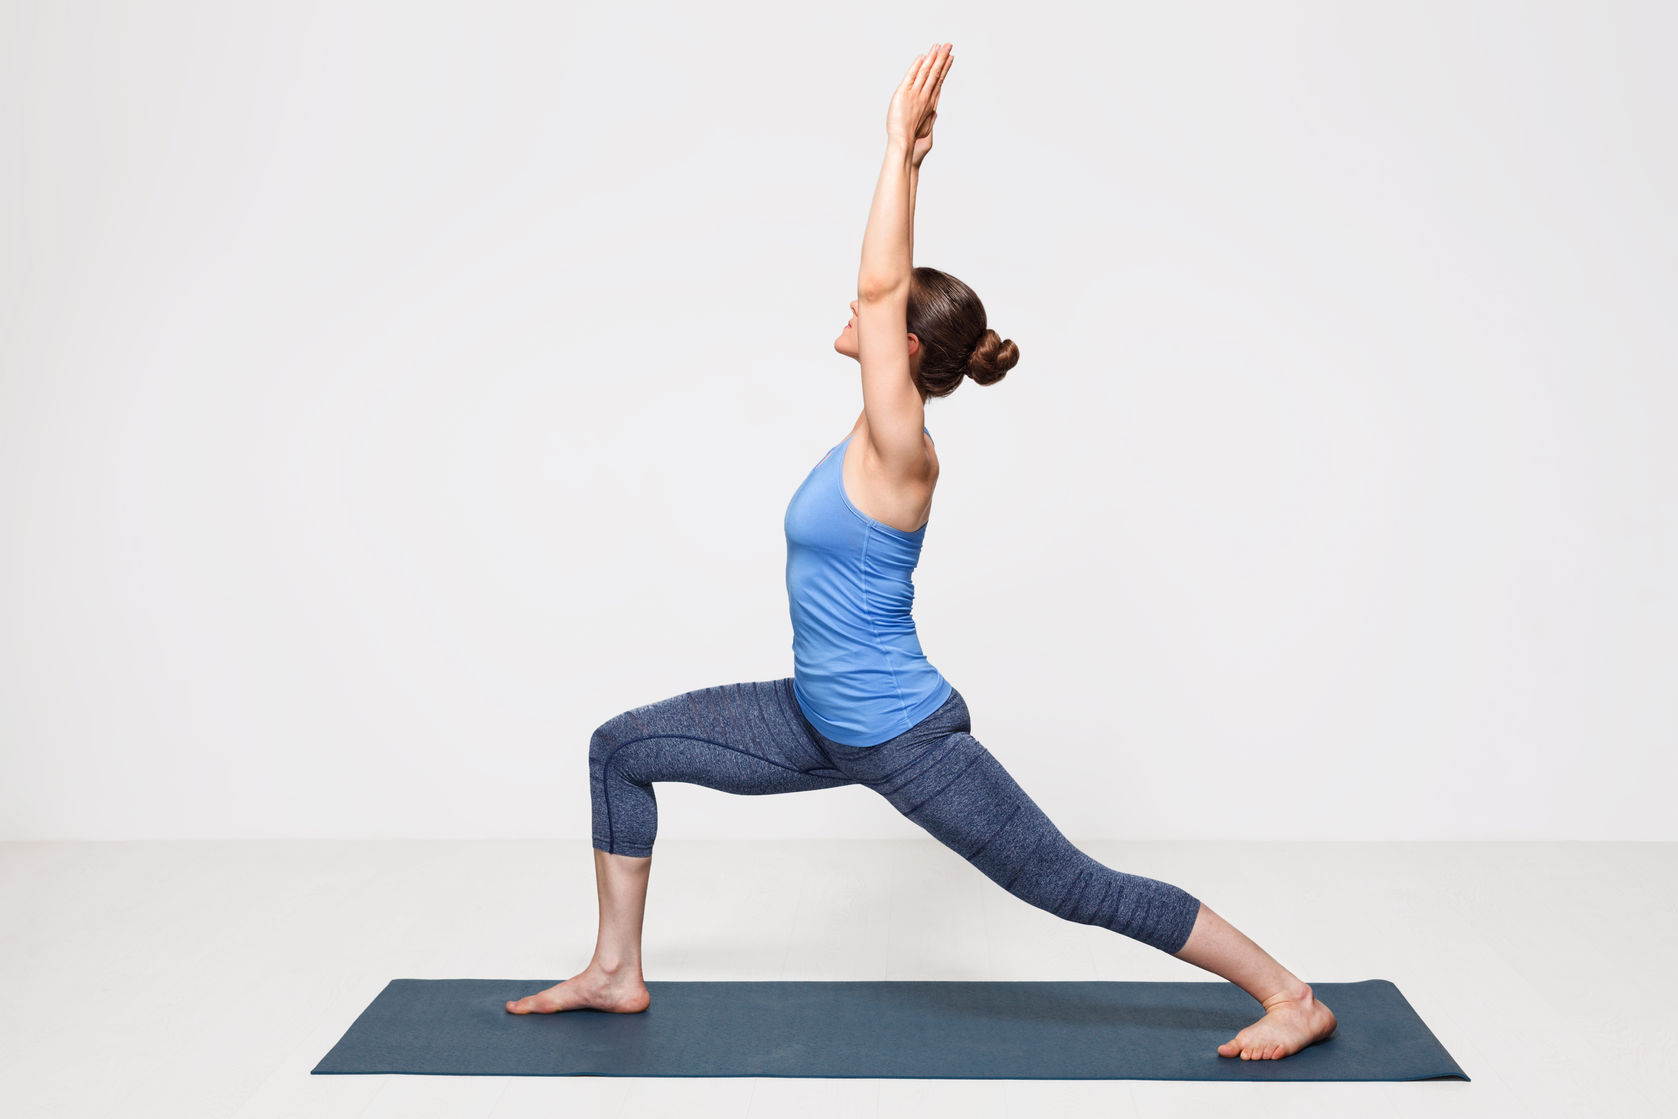 50988754 - beautiful sporty fit yogini woman practices yoga asana virabhadrasana 1 - warrior pose 1